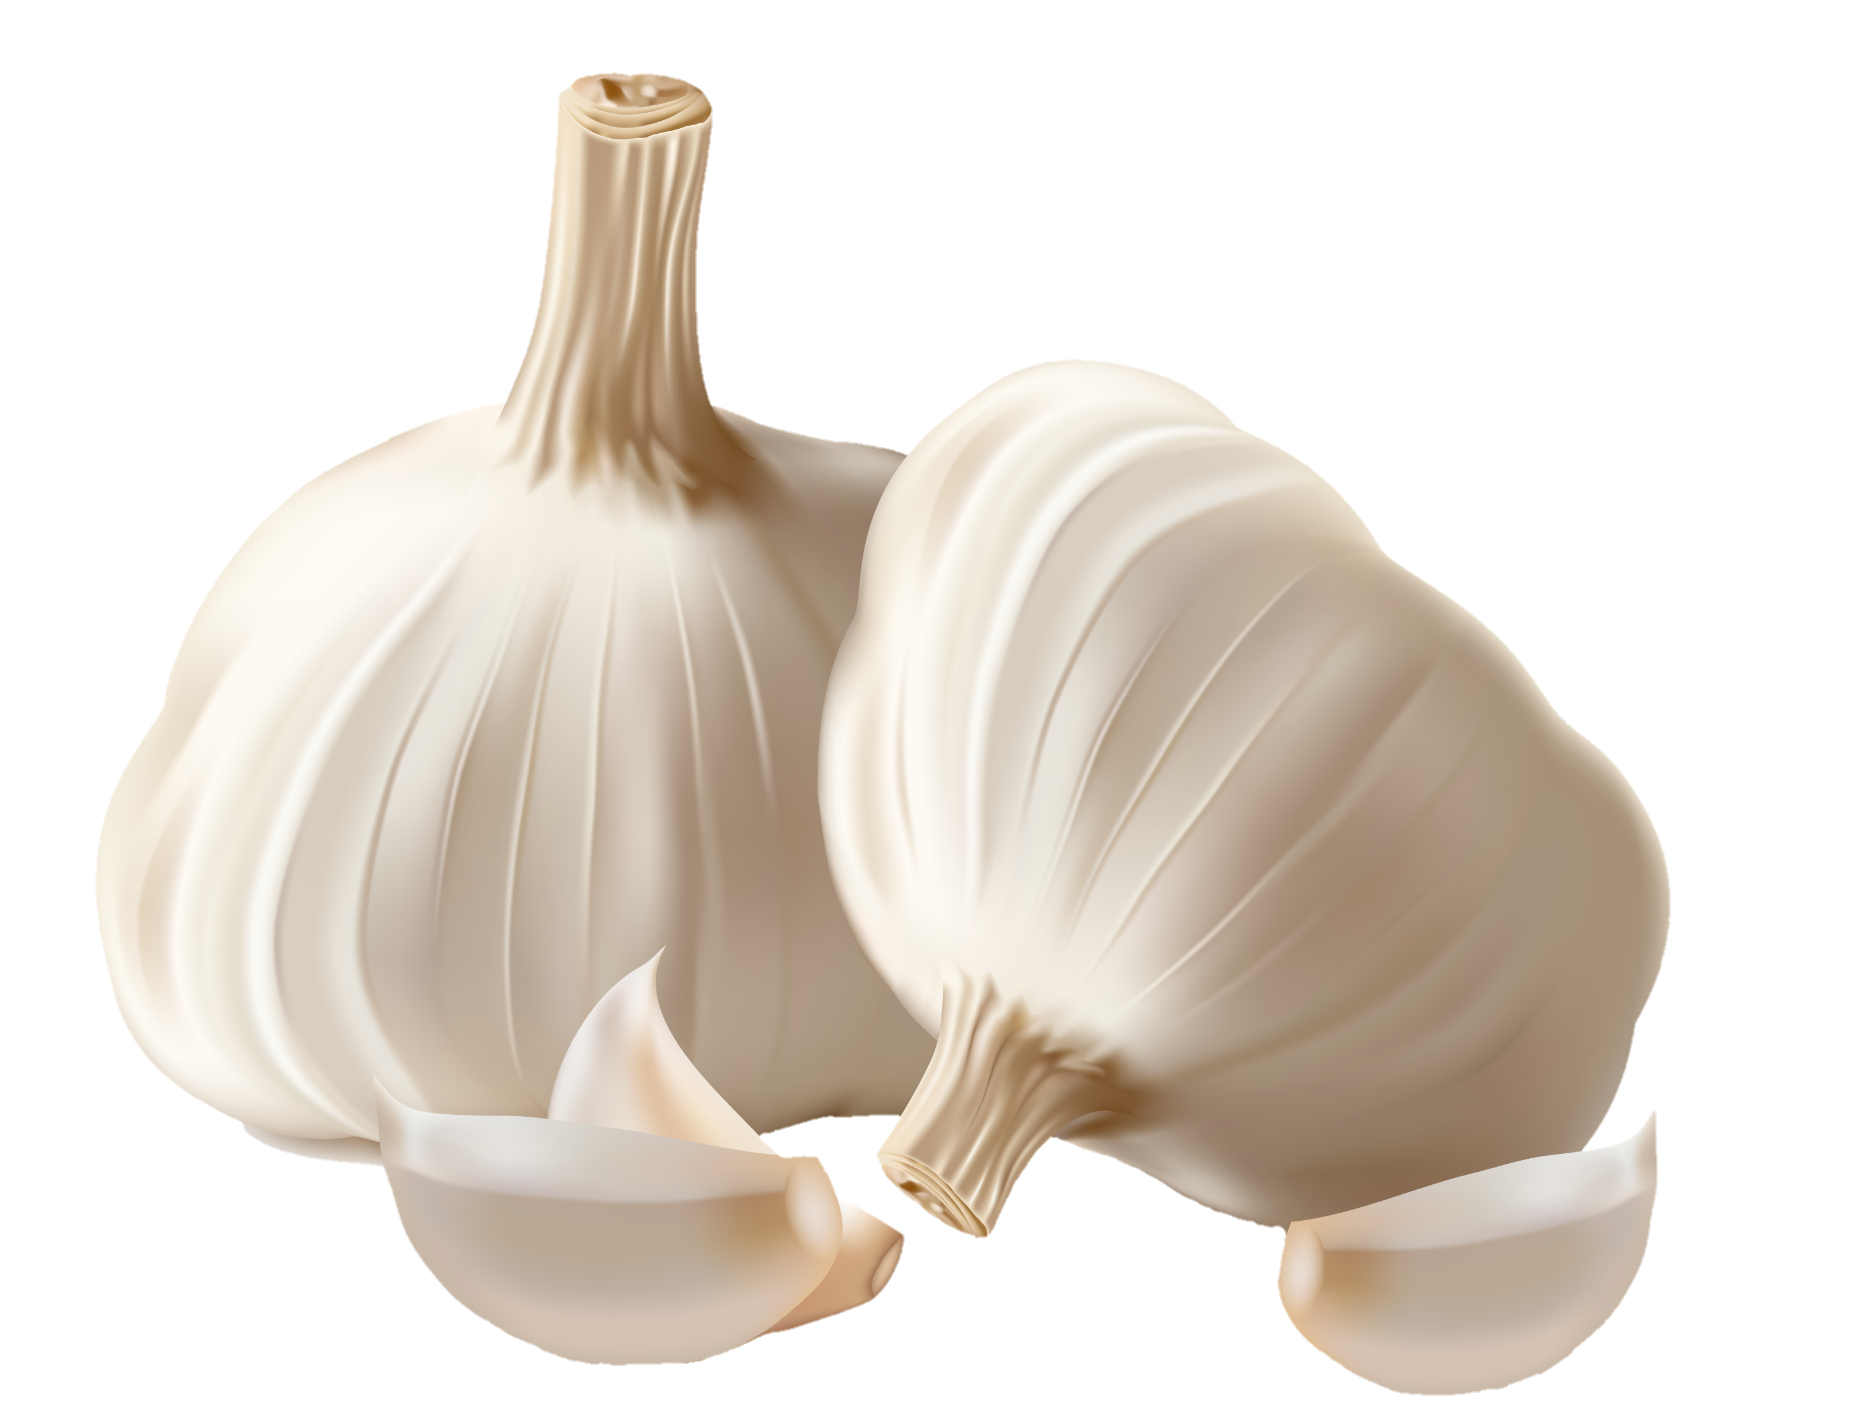 Garlic-13